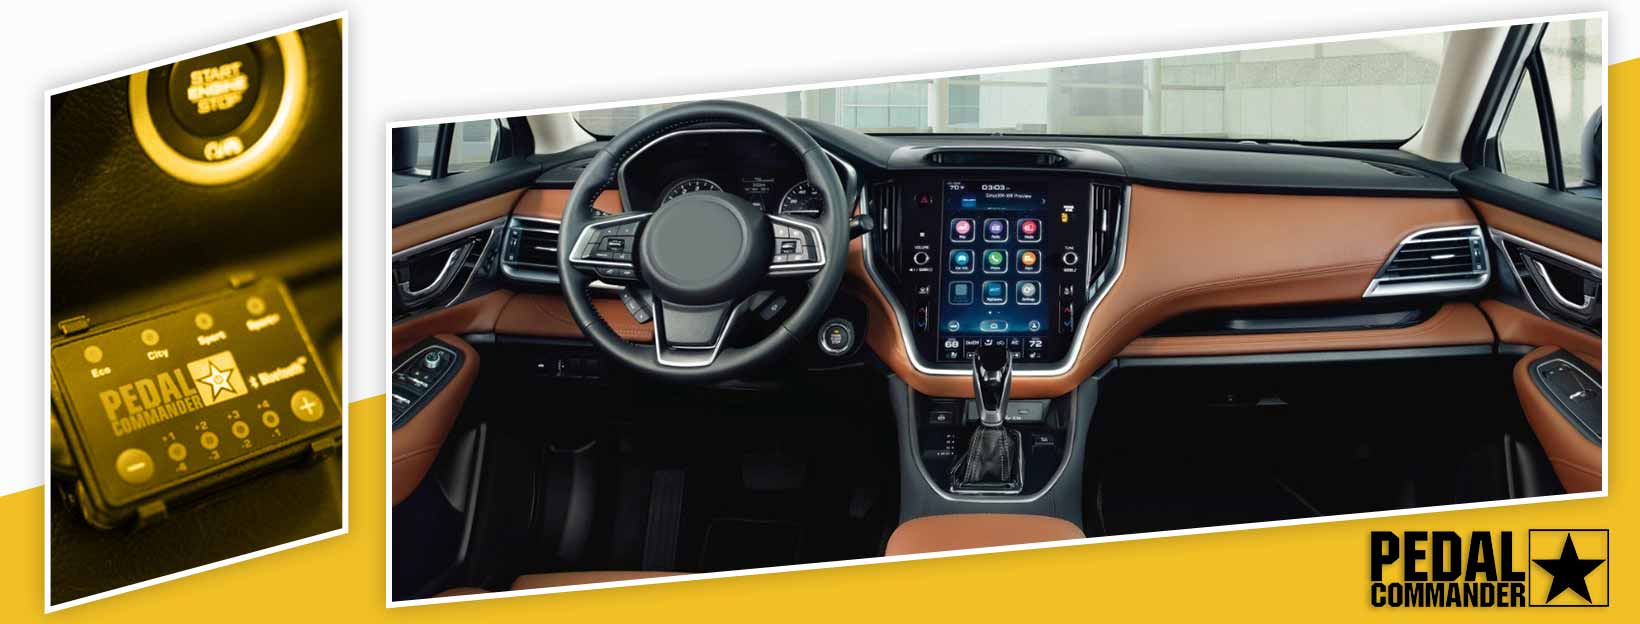 Pedal Commander for Subaru Legacy - interior